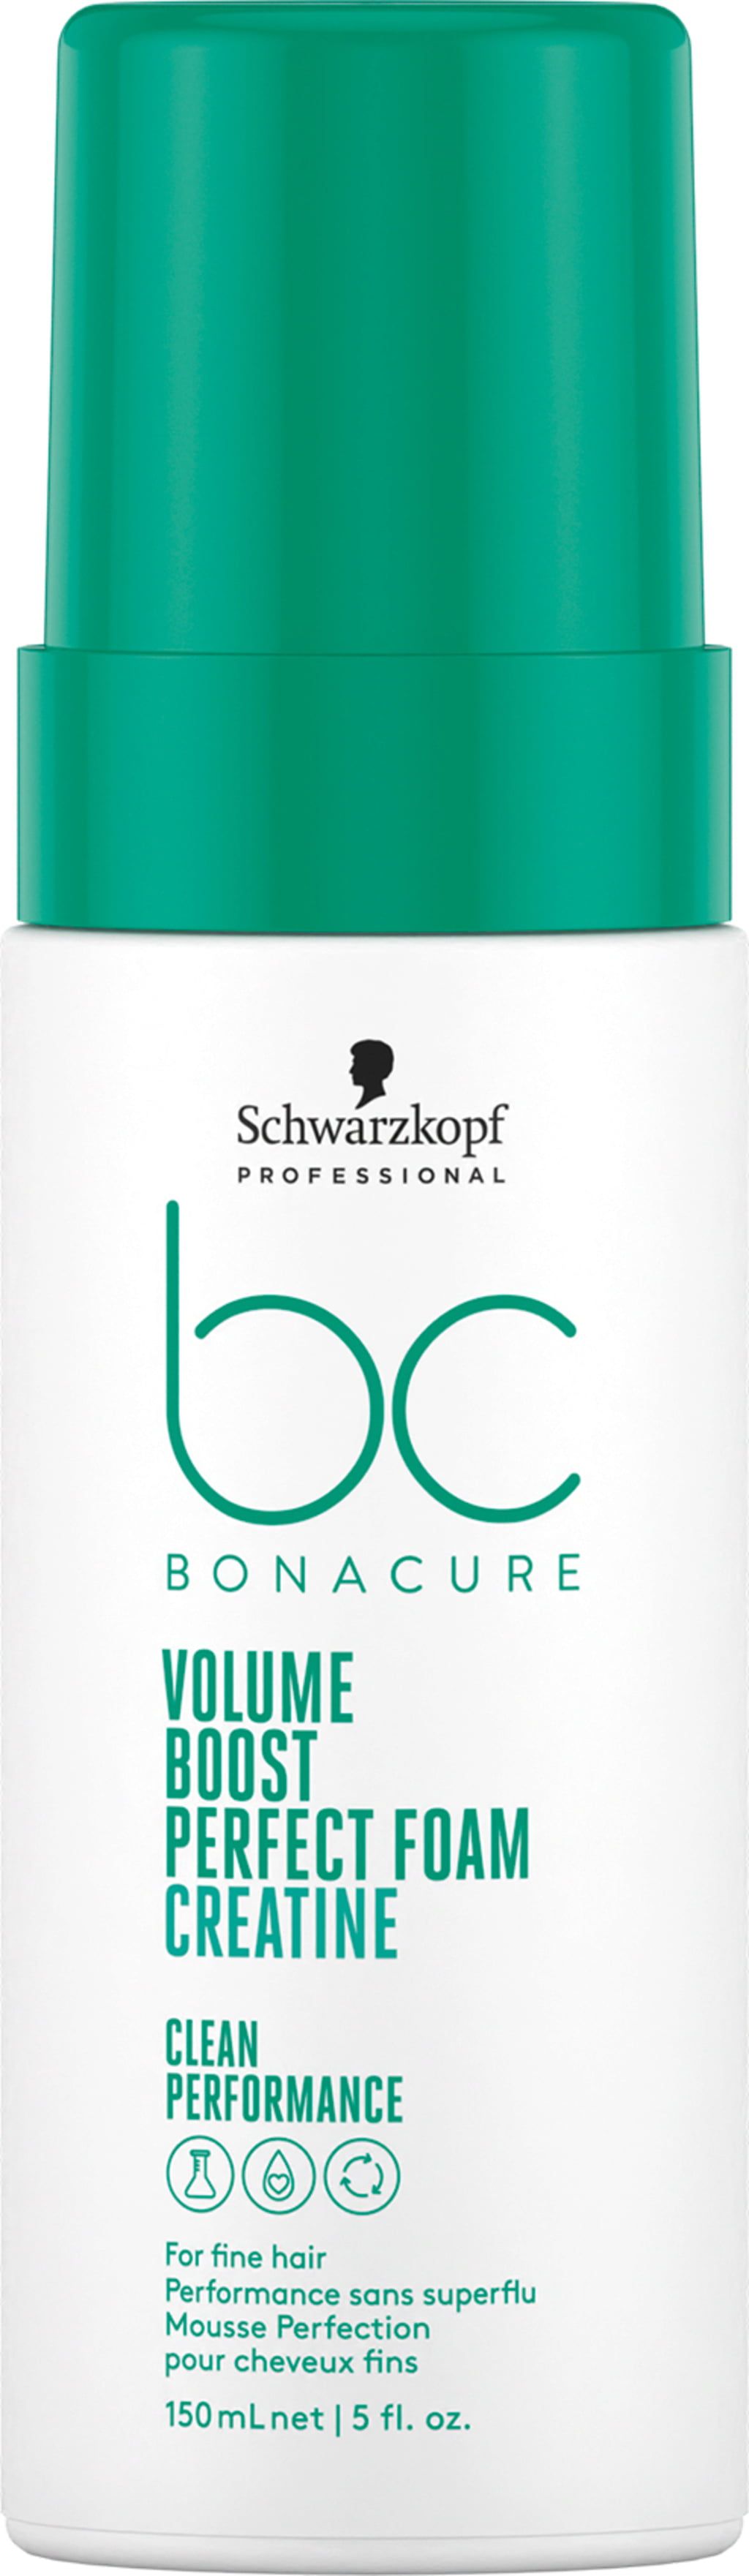 Schwarzkopf Professional Bonacure Volume Boost Creatine Perfect Foam, 150  ml - labelhair